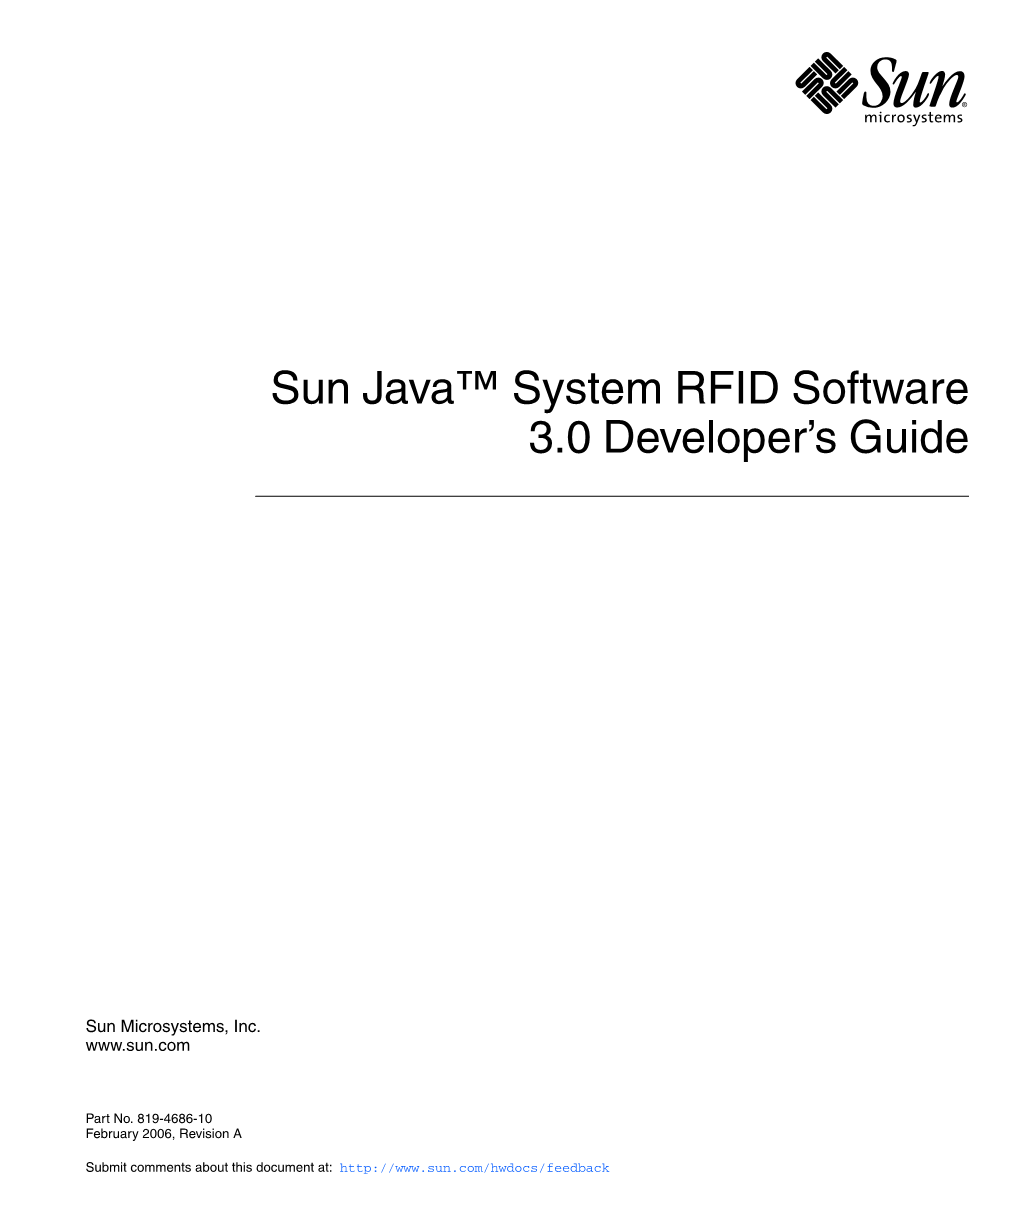 Sun Java System RFID Software 3.0 Developer's Guide